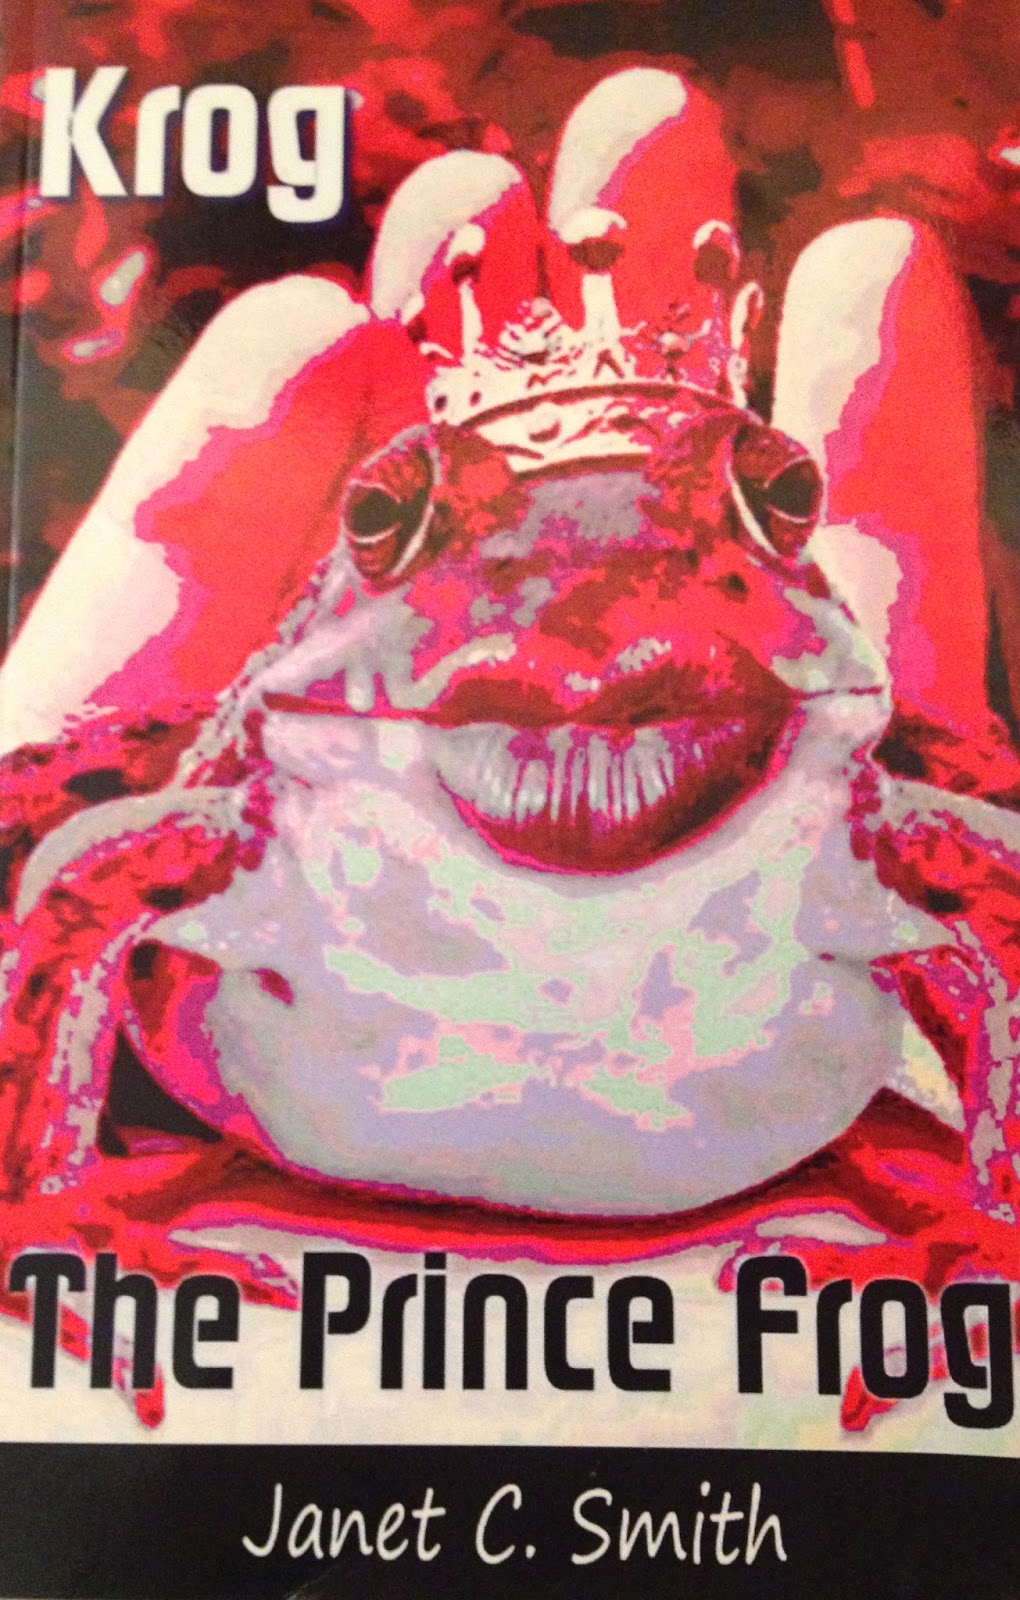 krog the frog prince